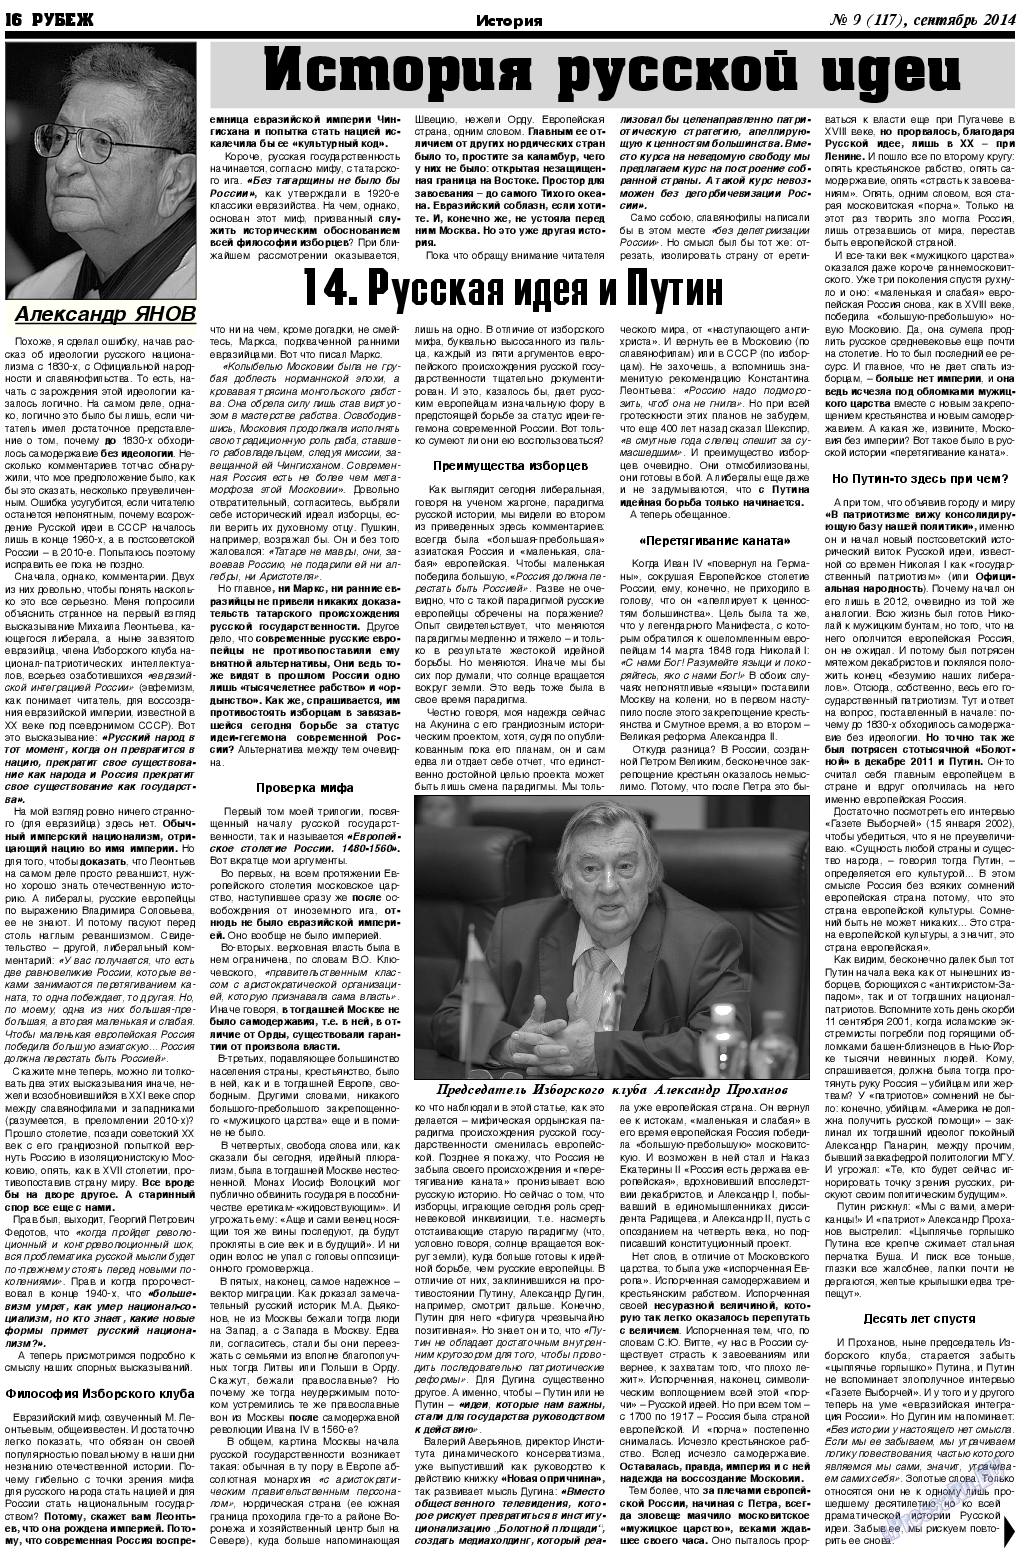 Рубеж, газета. 2014 №9 стр.16